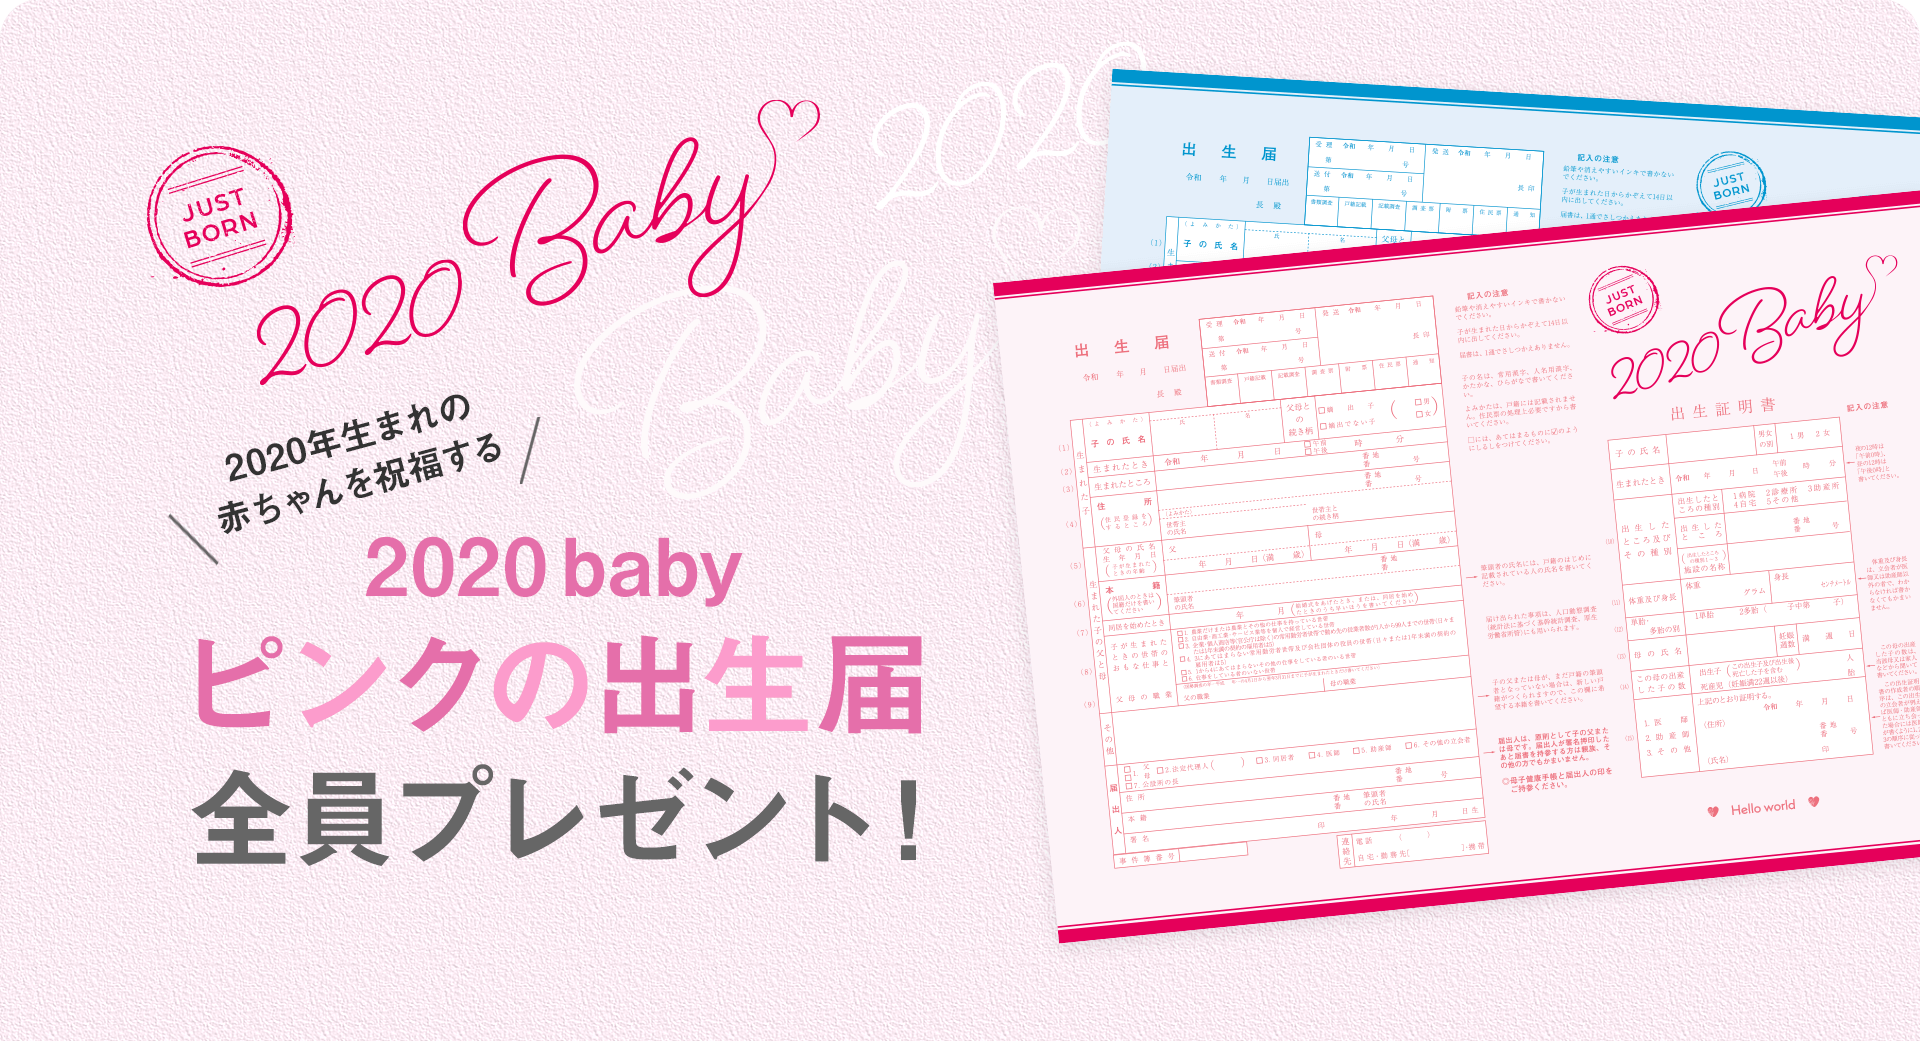 「2020baby ピンクの出生届」全員プレゼント